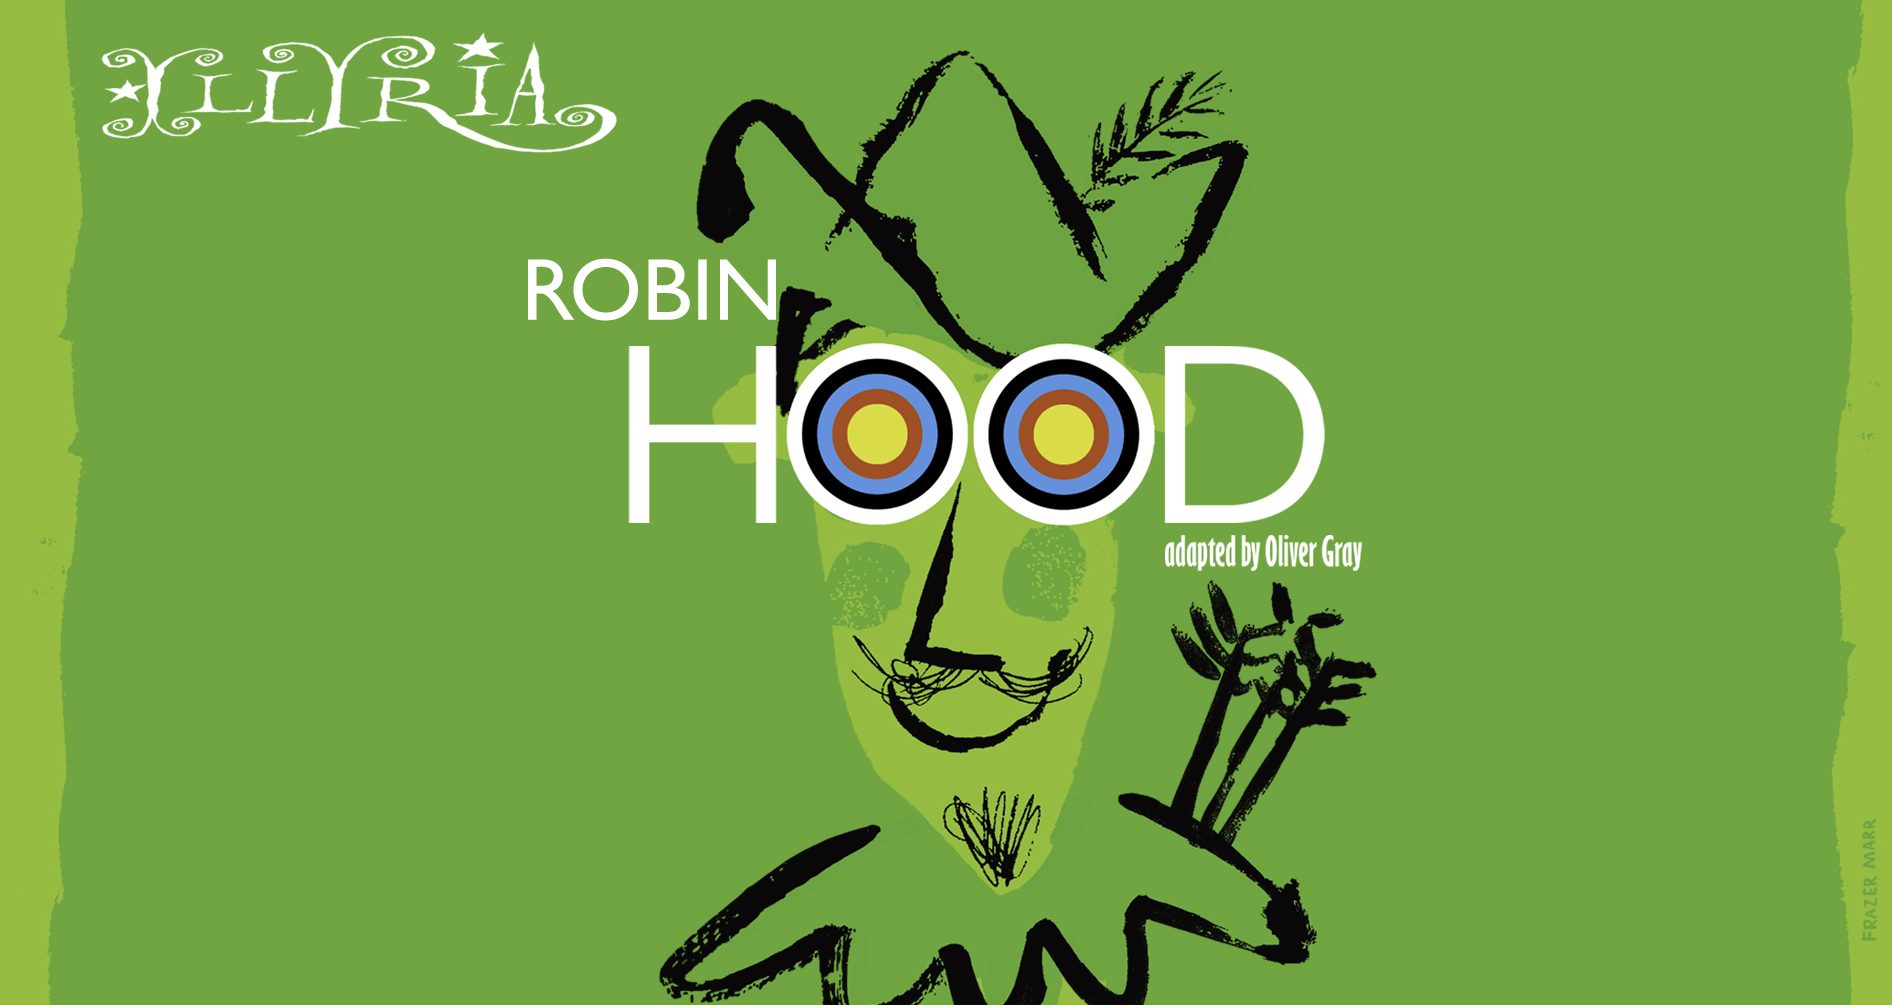 Illyria present: Robin Hood Open Air Theatre